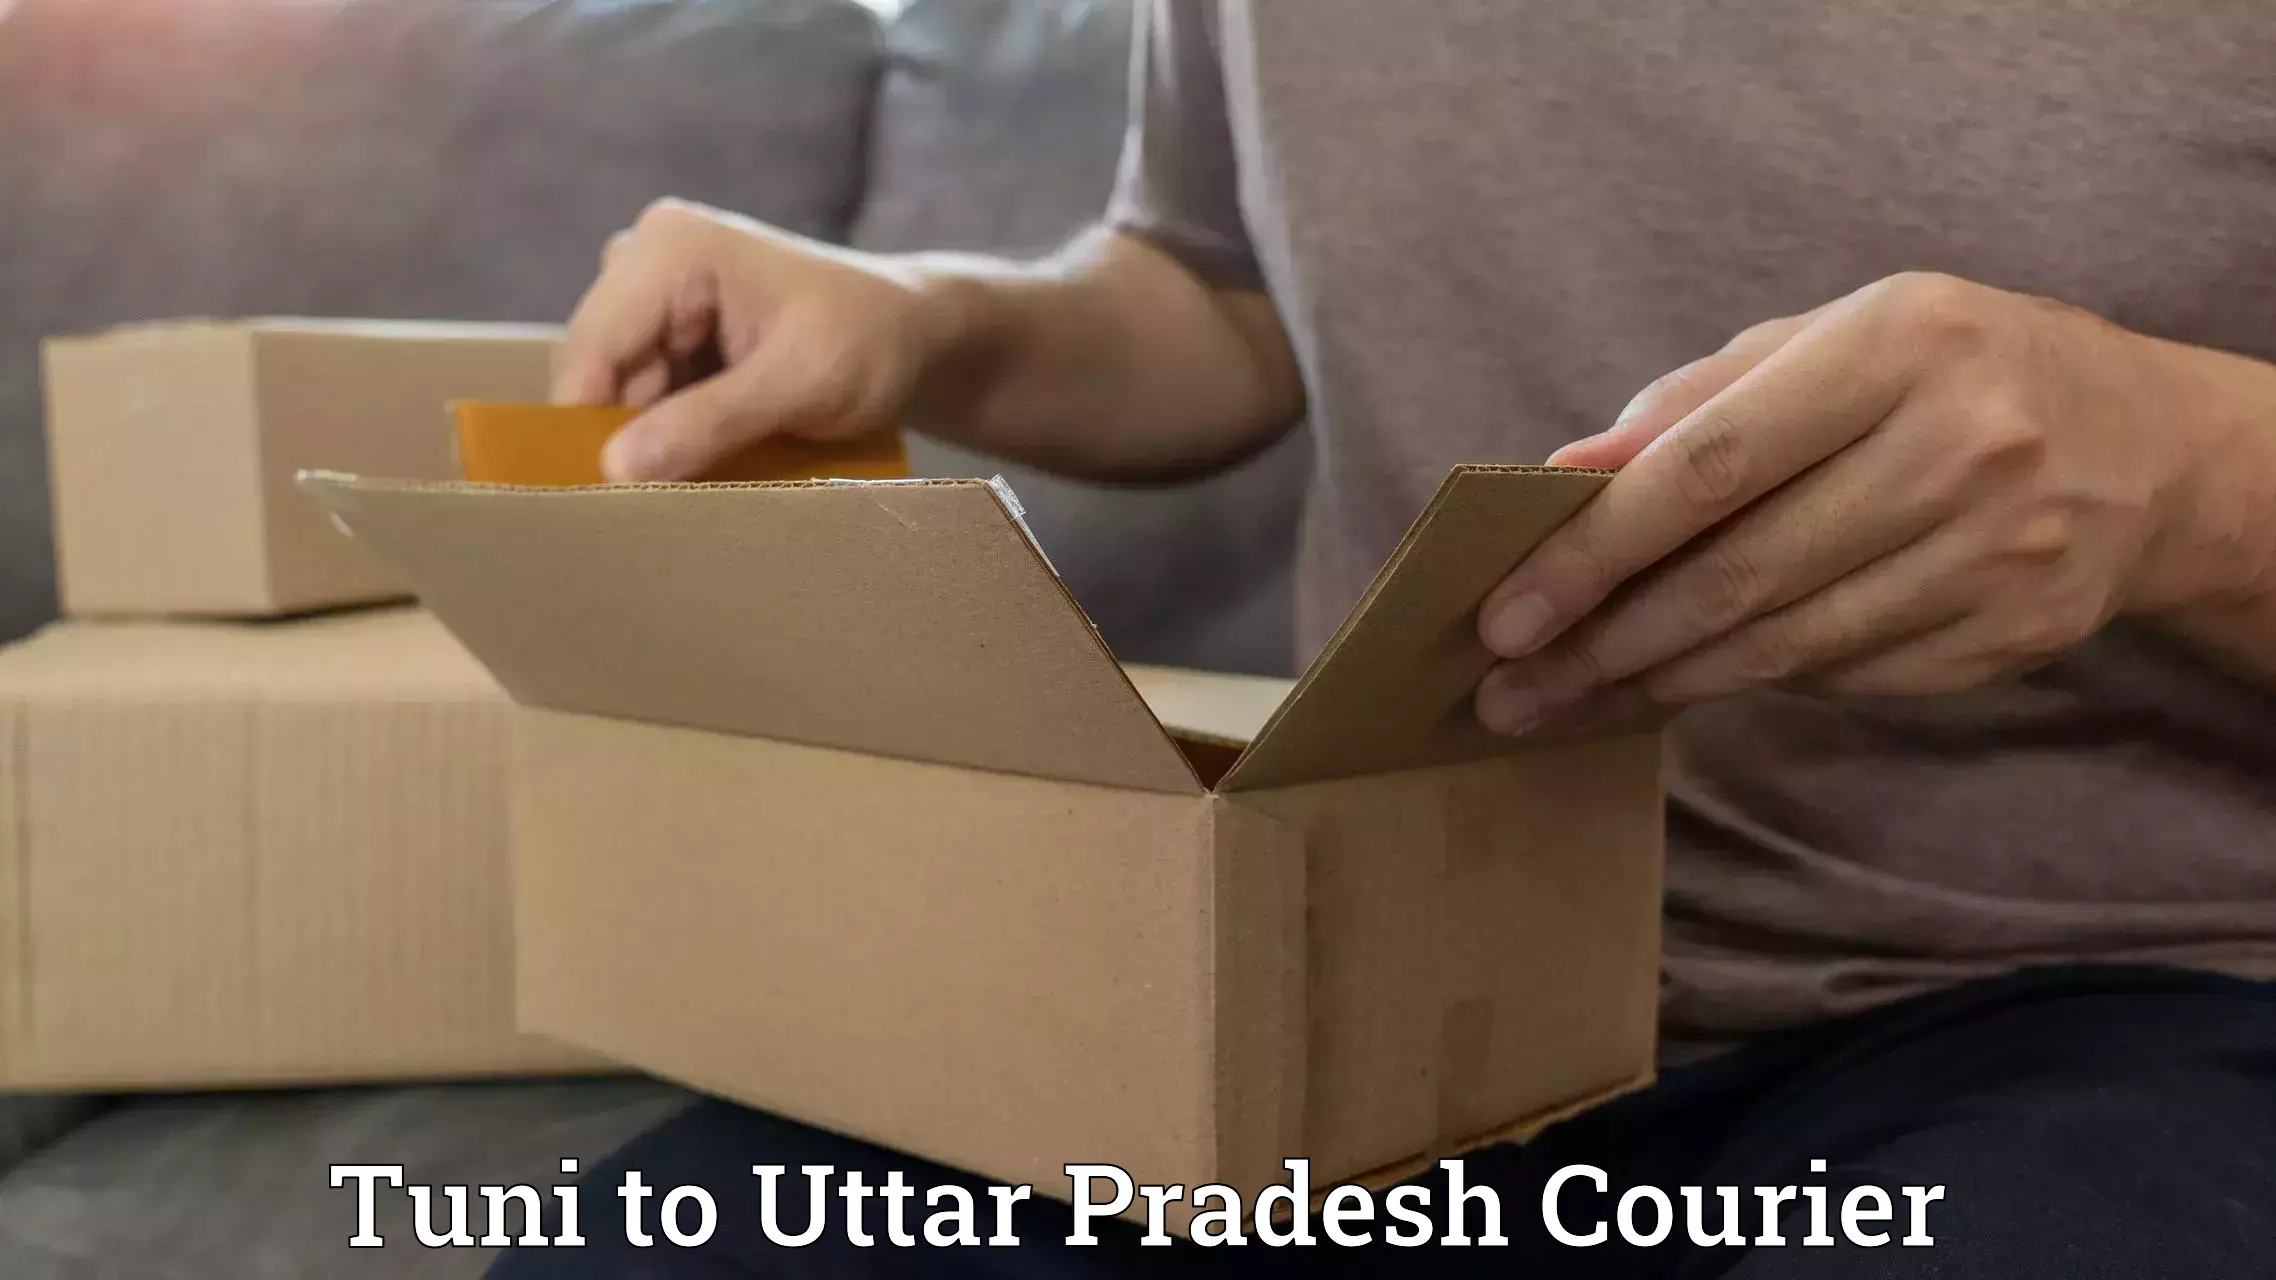 Efficient parcel service Tuni to Uttar Pradesh